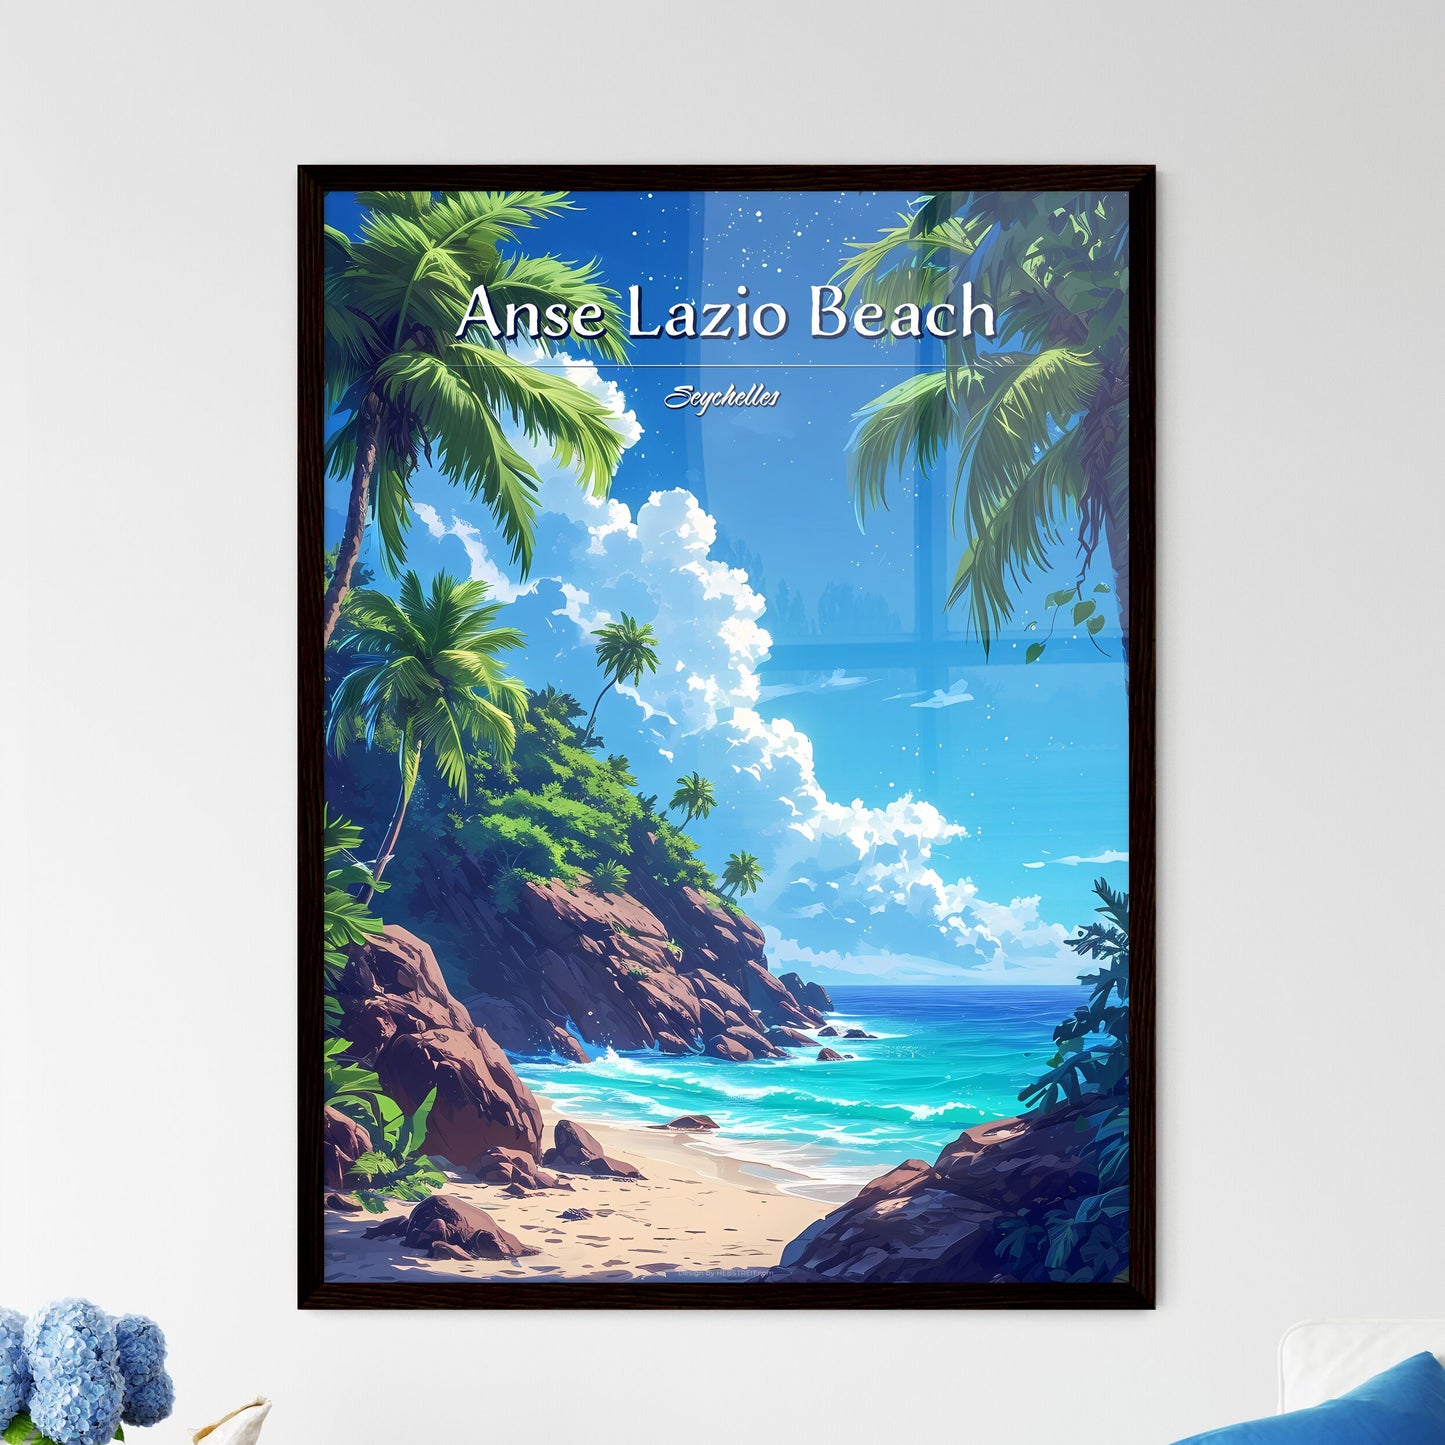 Anse Lazio Beach - Art print of a beach with palm trees and rocks Default Title